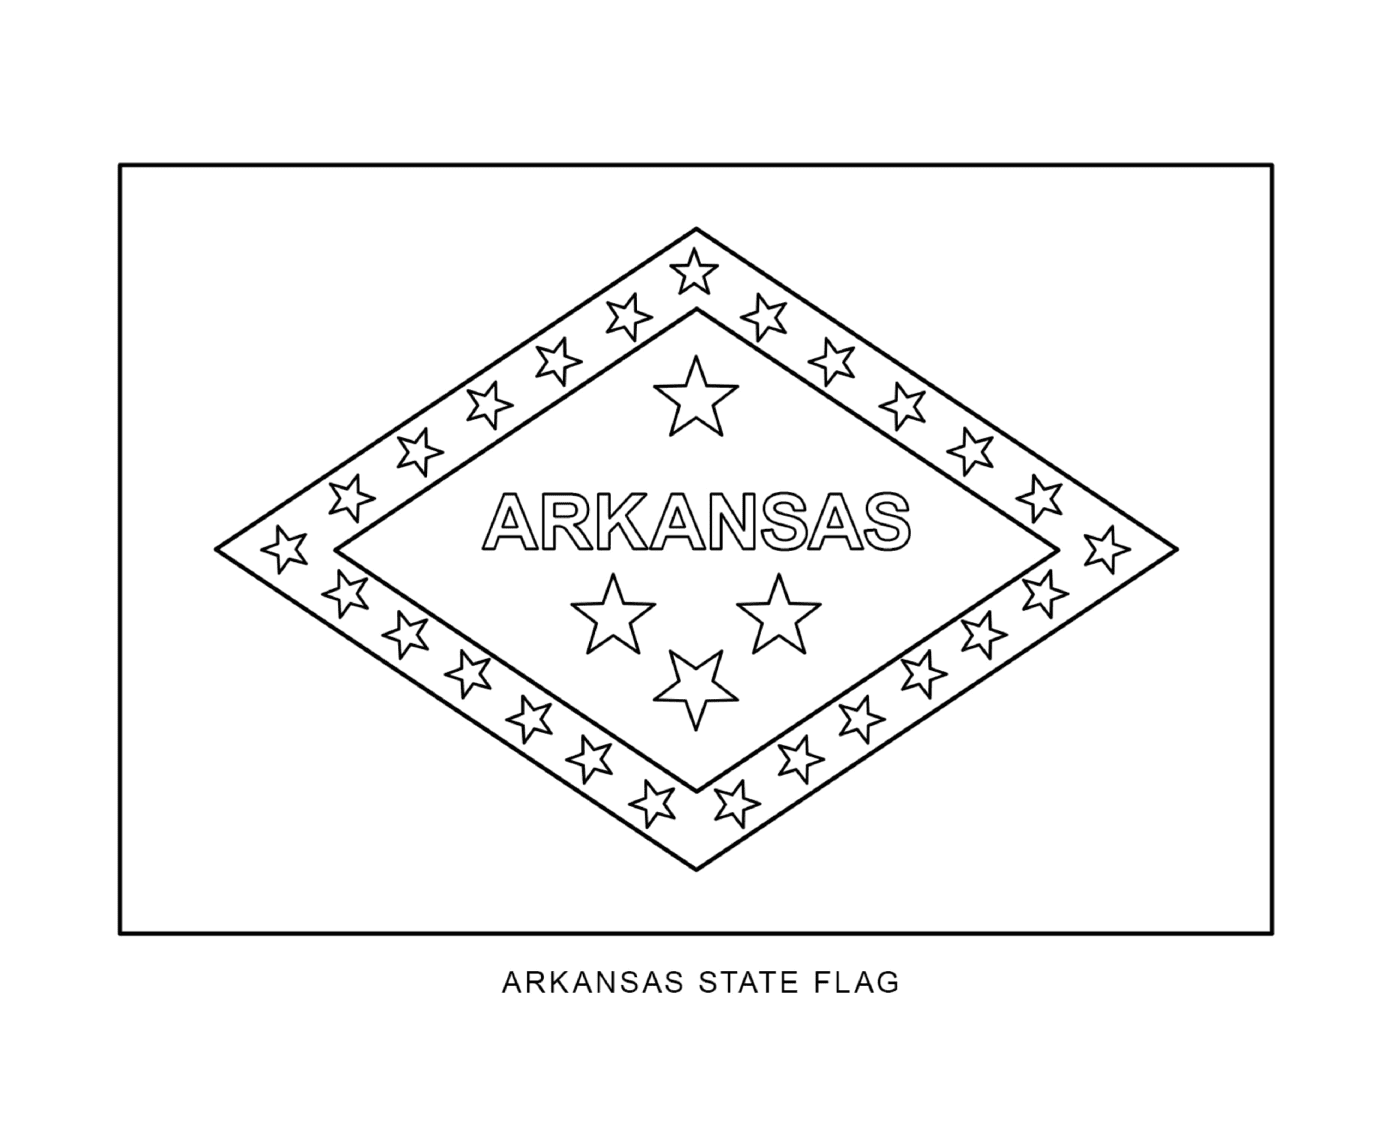  Флаг штата Арканзас, состоящий из звезд 